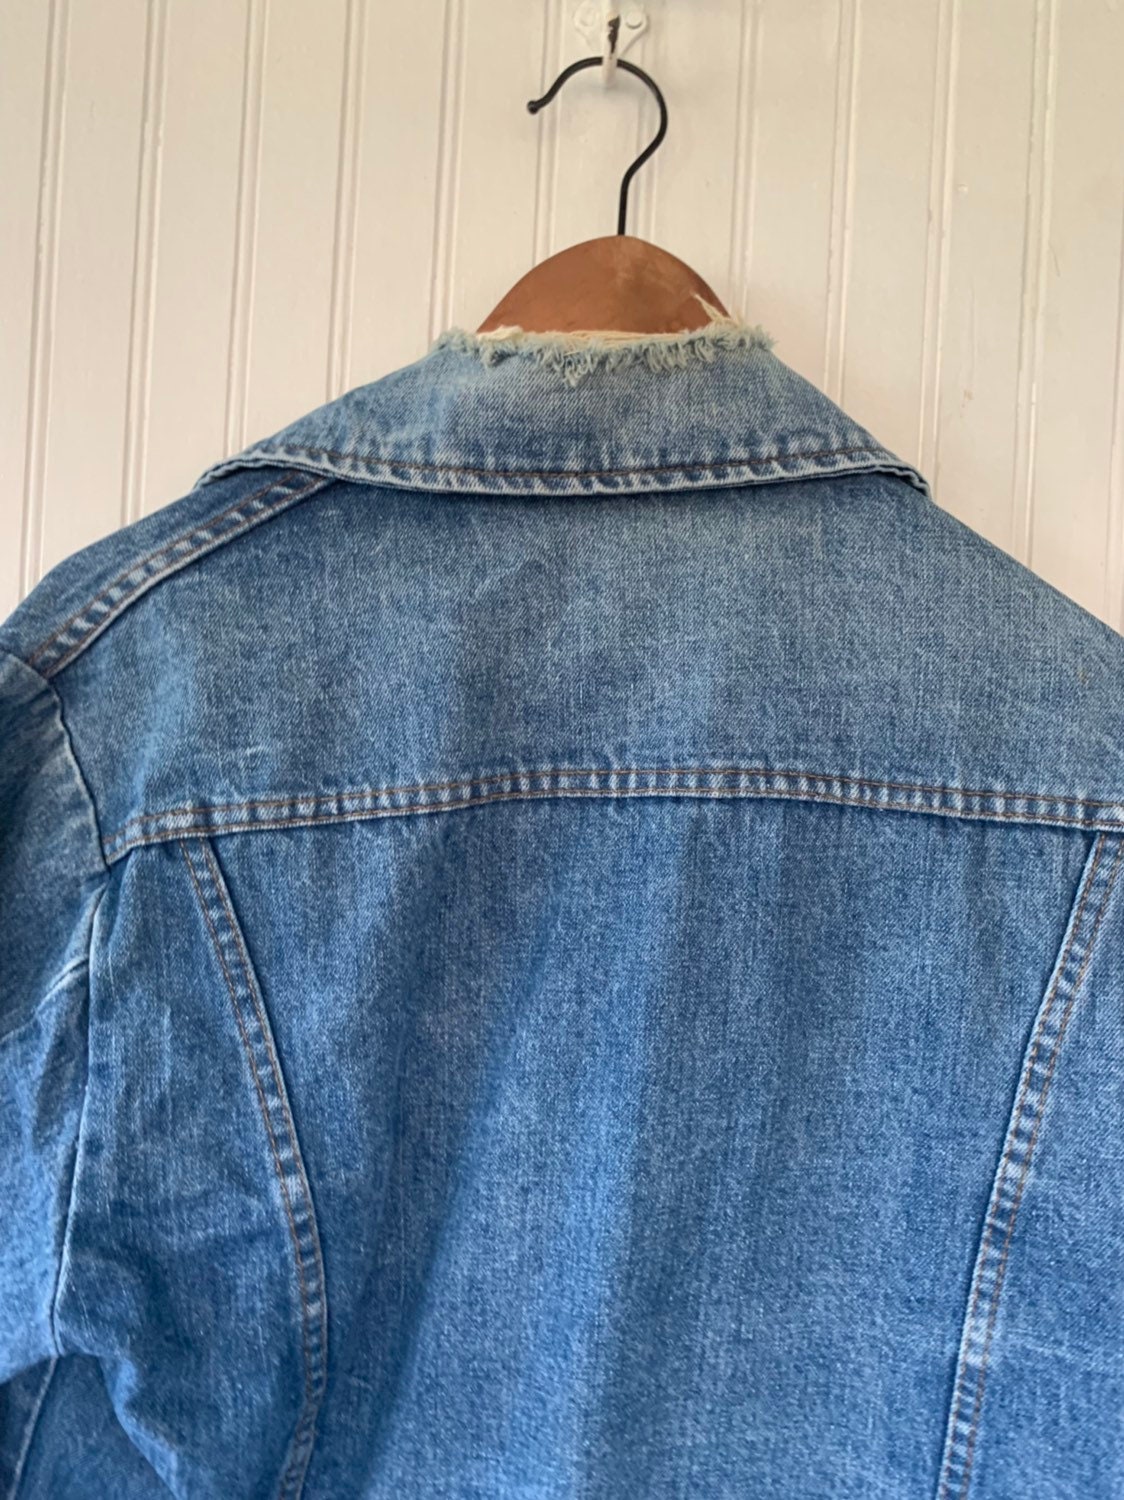 Vintage 80s Roebucks Blue Jean Jacket Denim Coat Worn In Size Large L